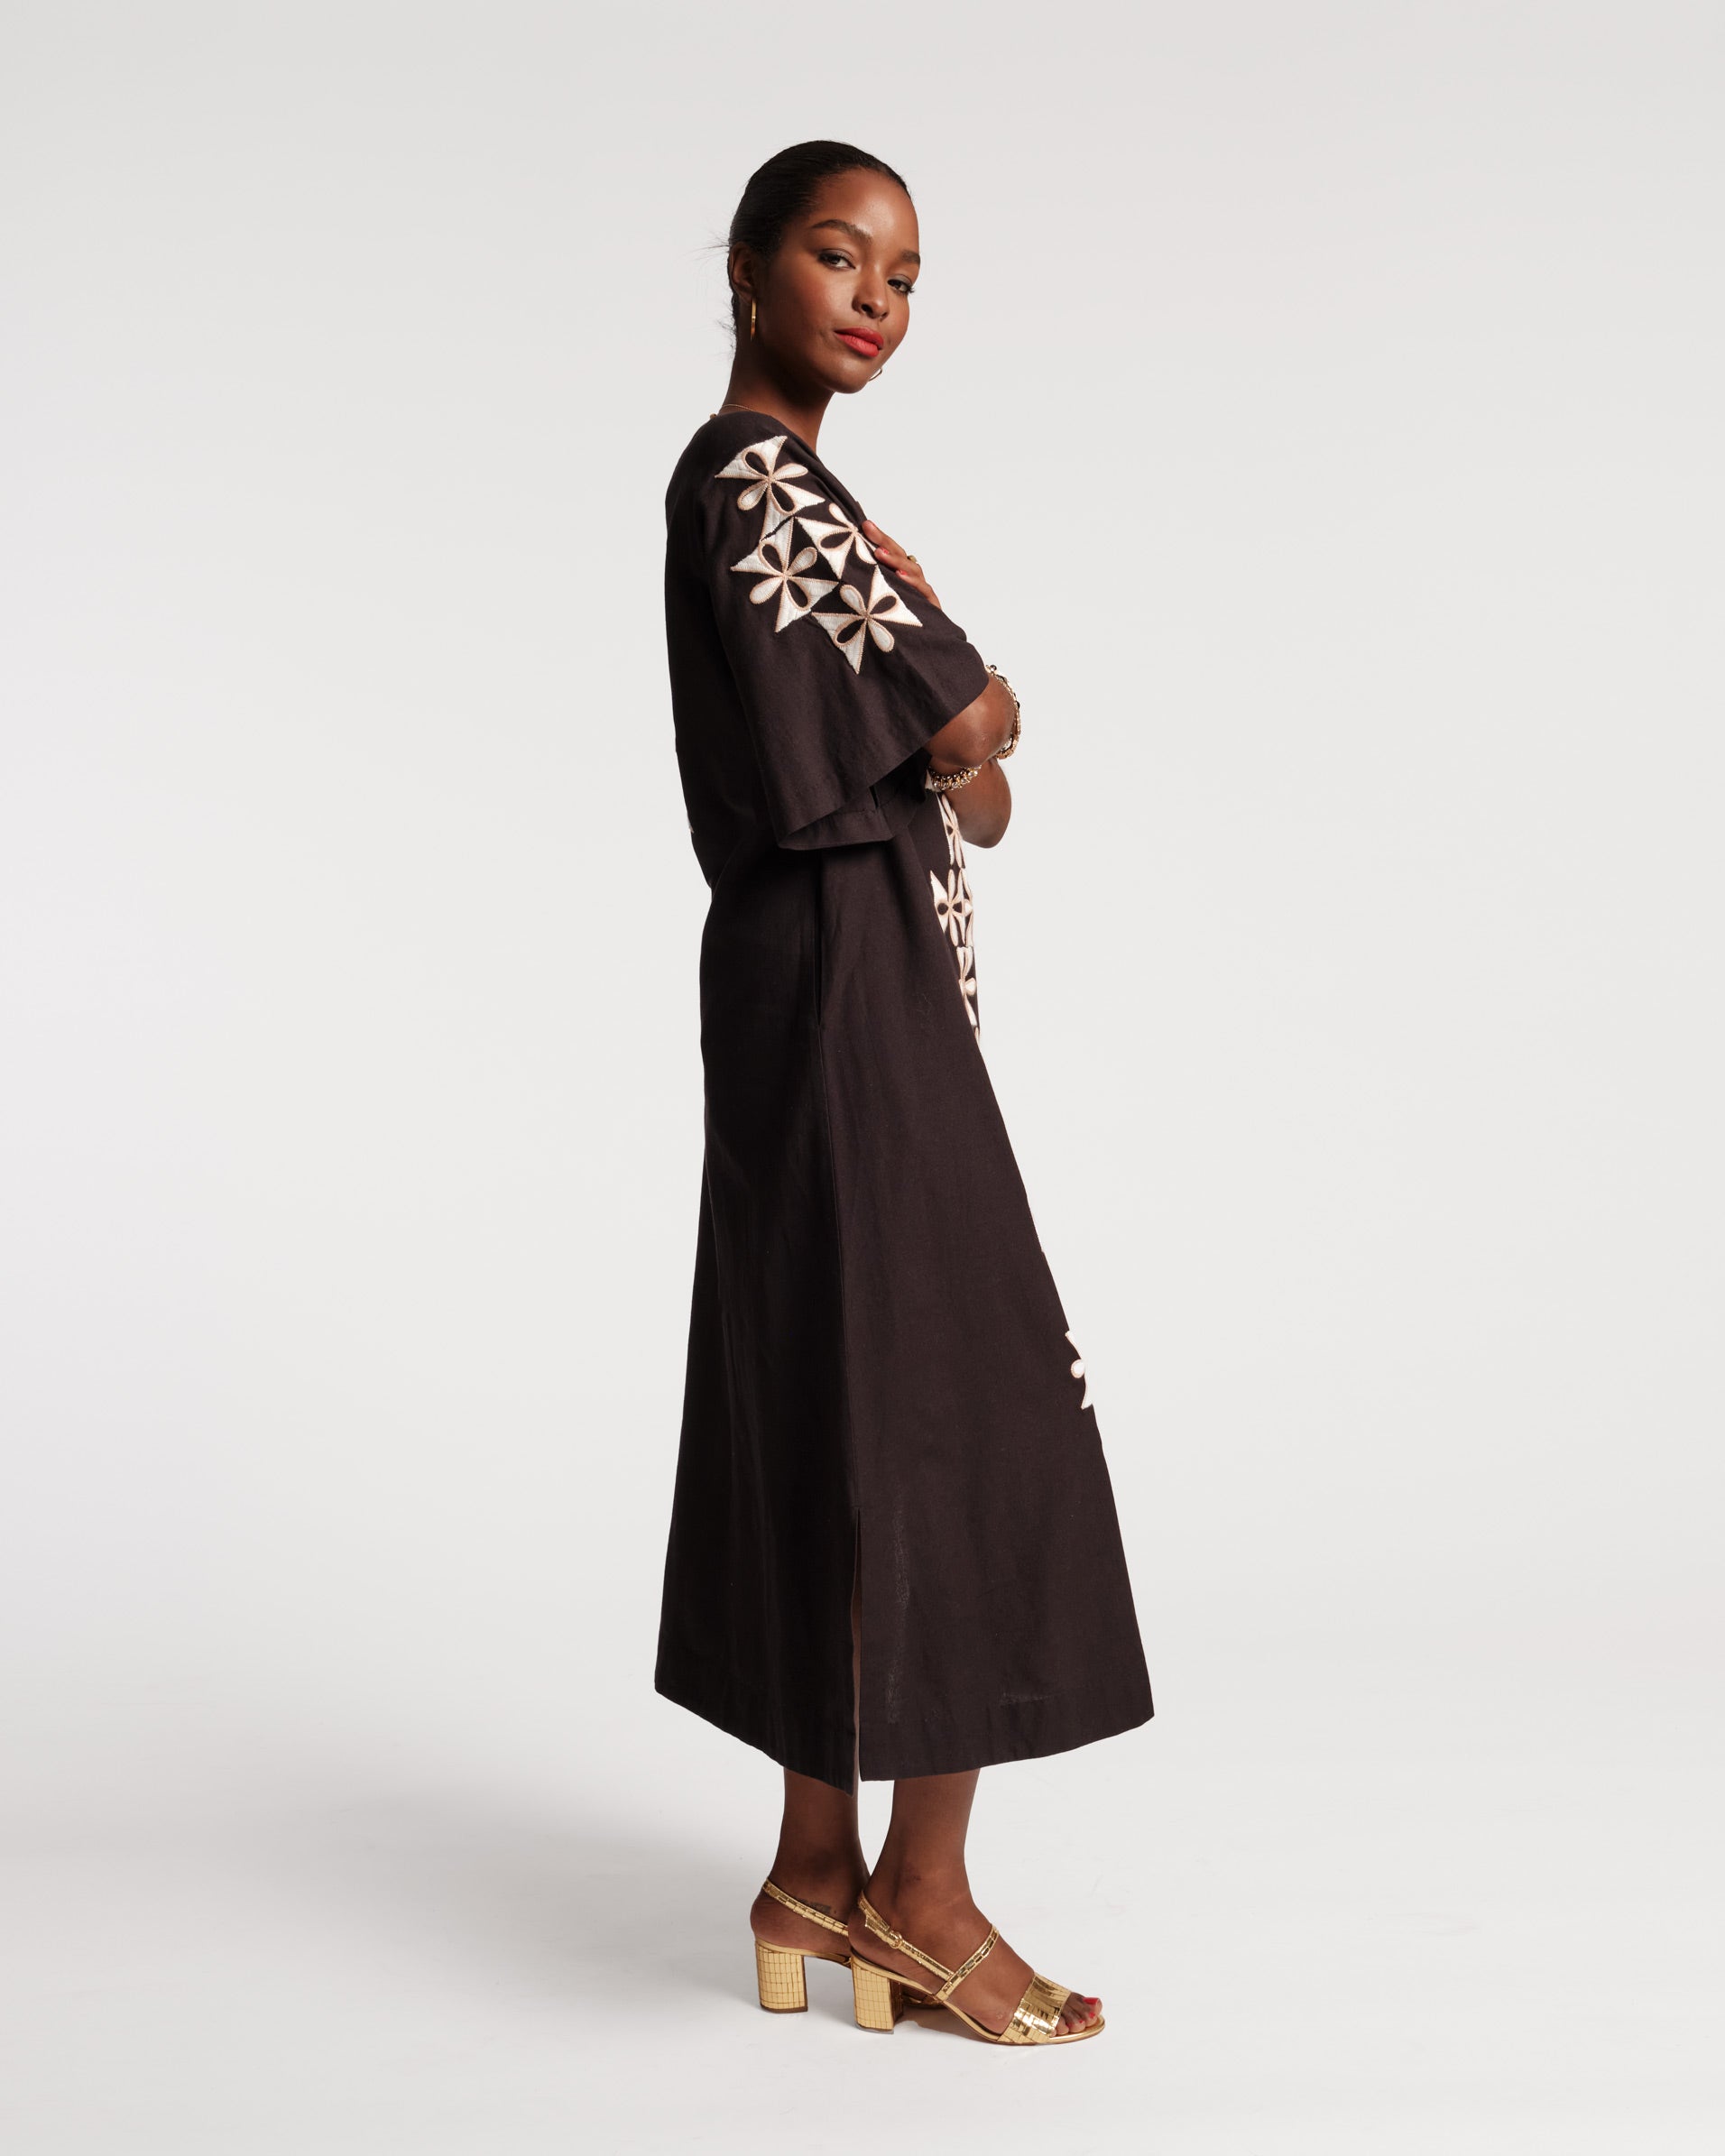 Stylish & | & Frances Dresses Trendy Valentine Caftans